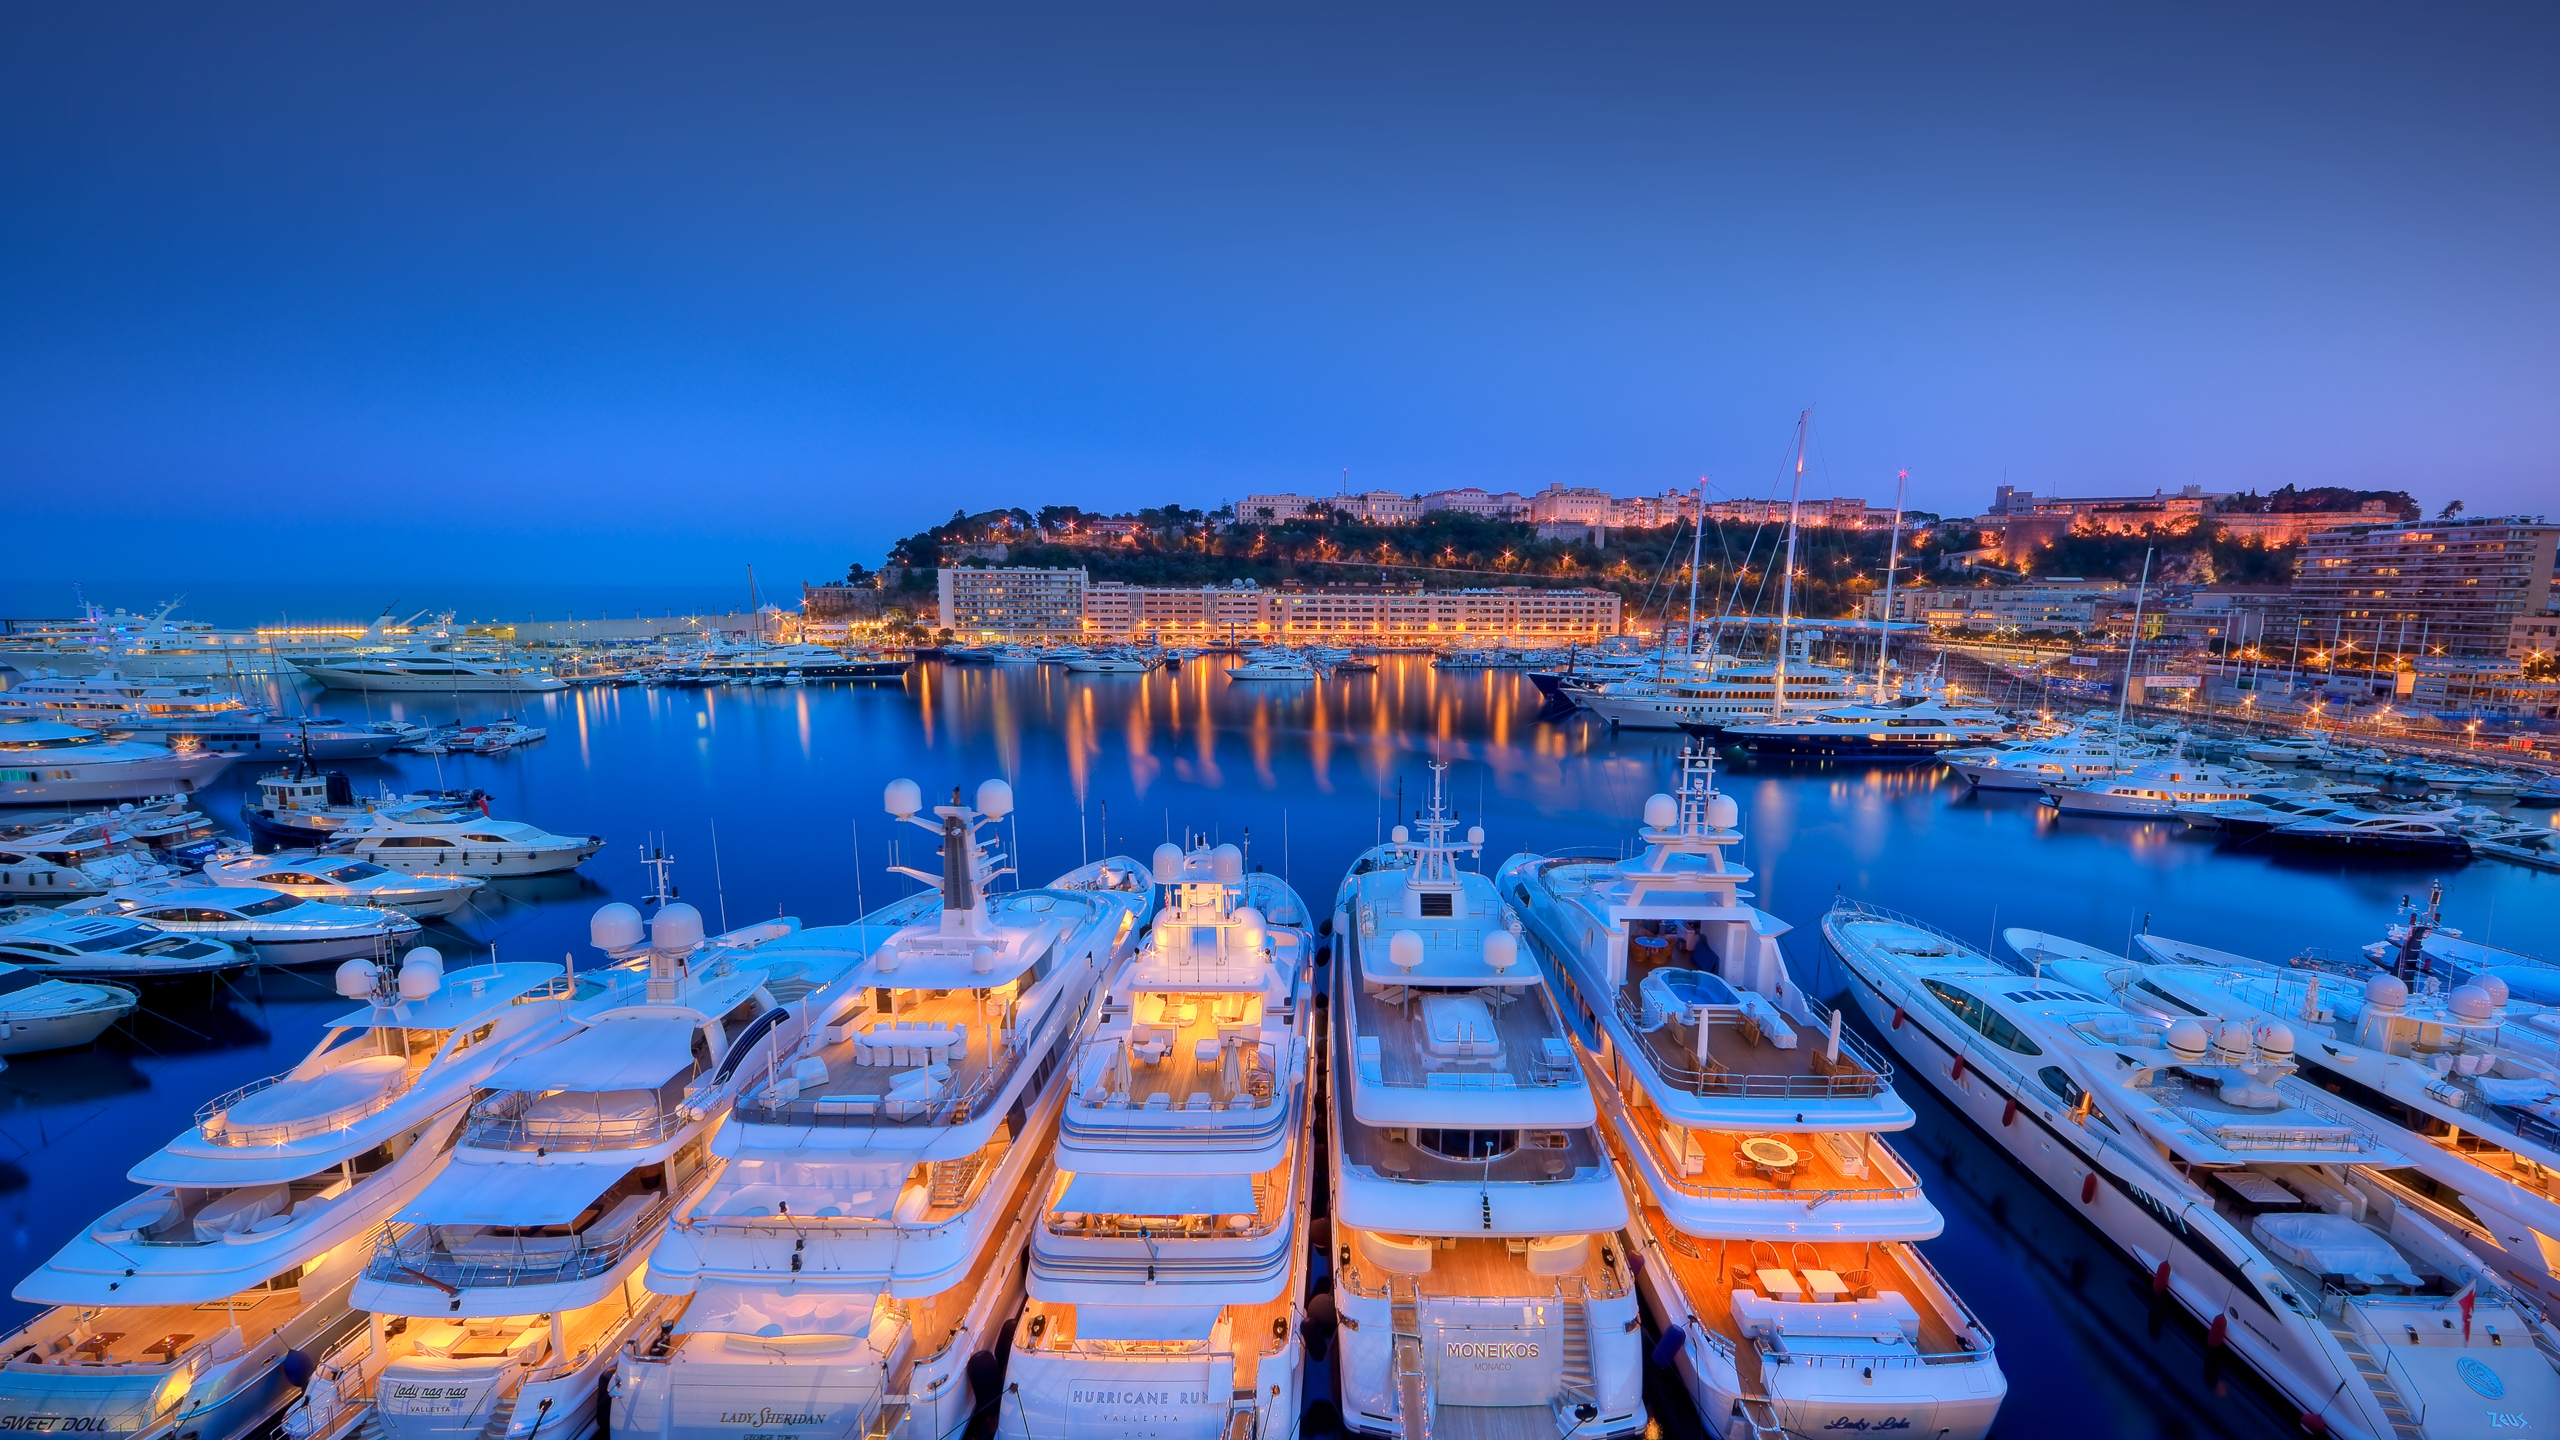 Monaco Seaport for 2560x1440 HDTV resolution